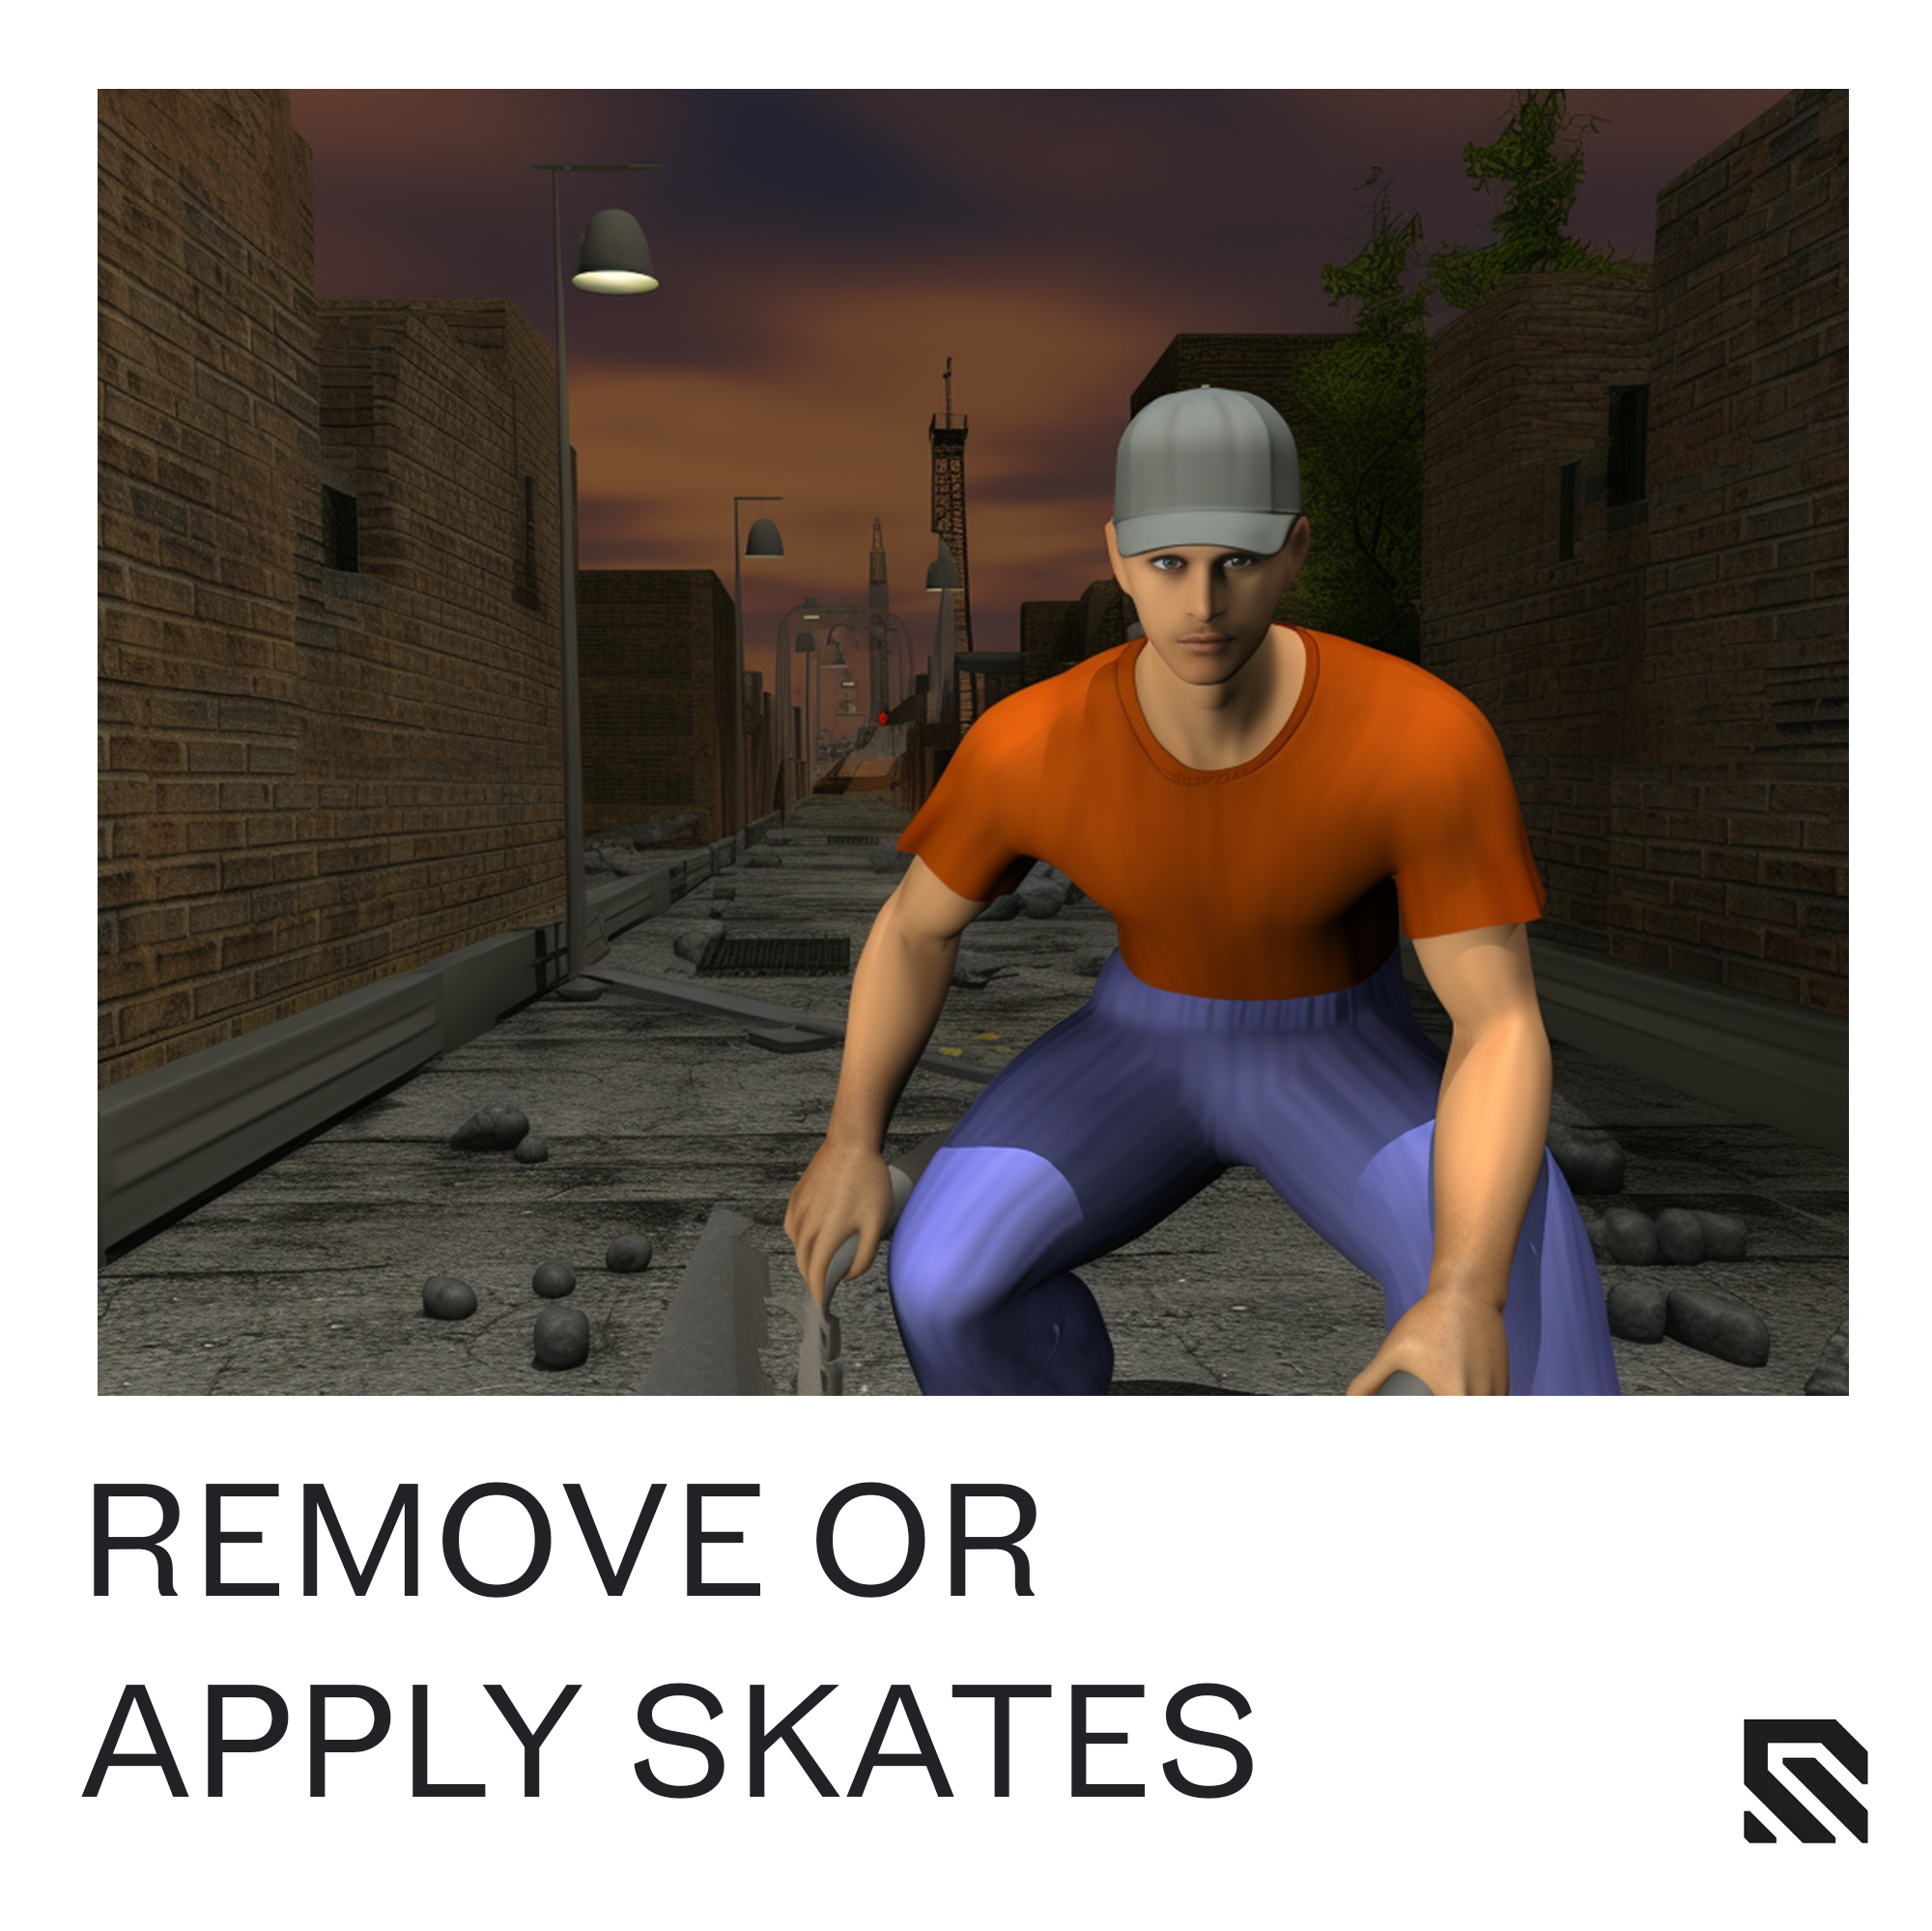 How remove apply skates man in a run down digital videogame screencapture neighborhood